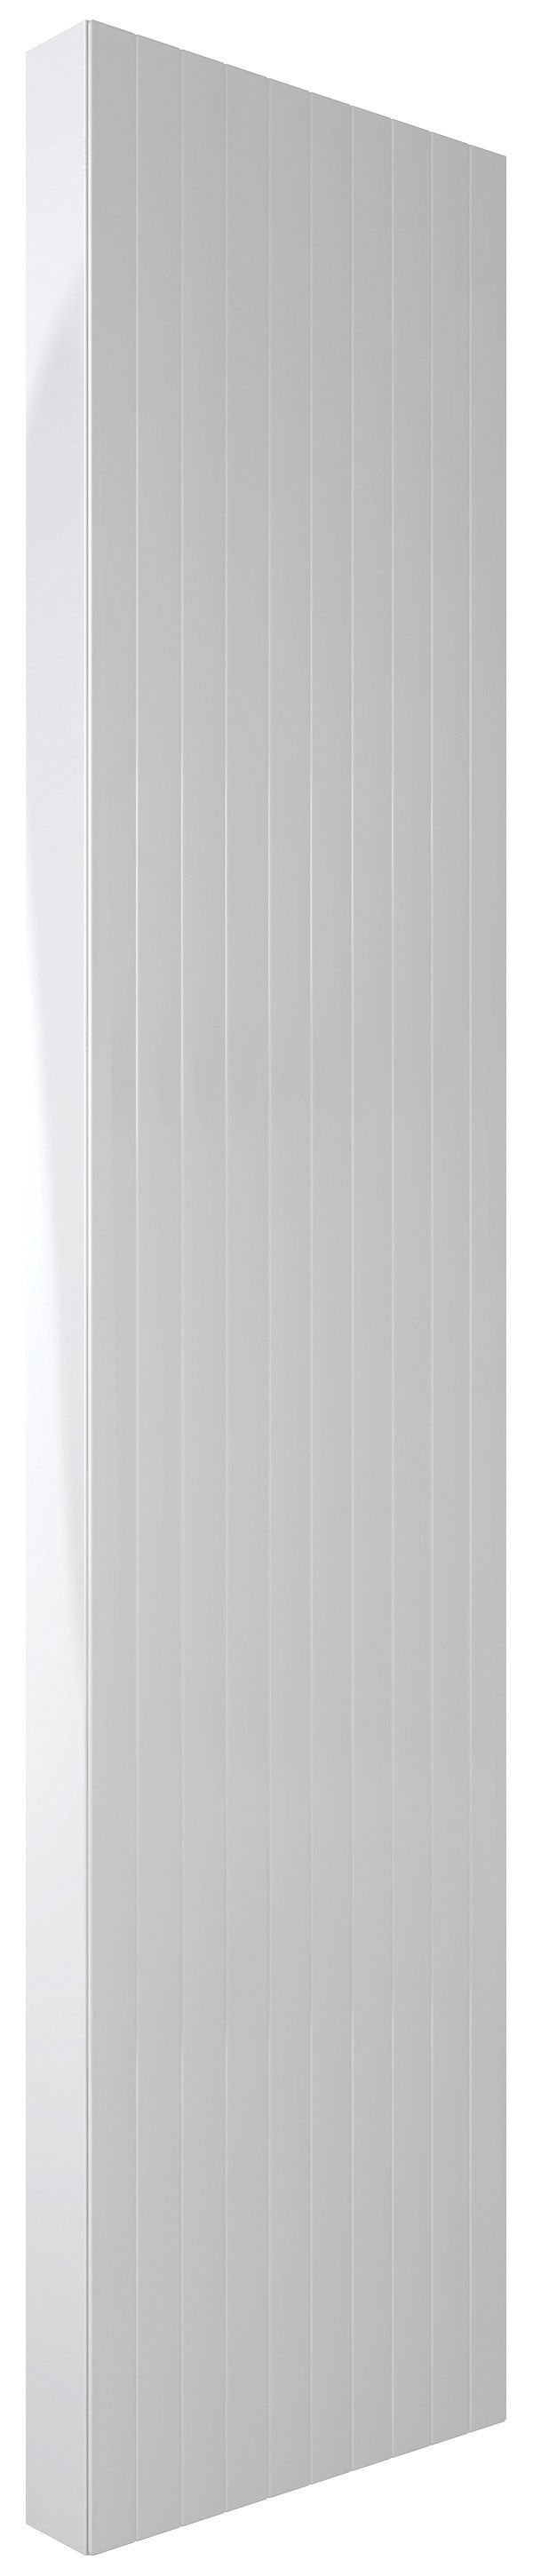 Image of Henrad Alto Double Convector Vertical Designer Radiator - White 1600 x 300 mm